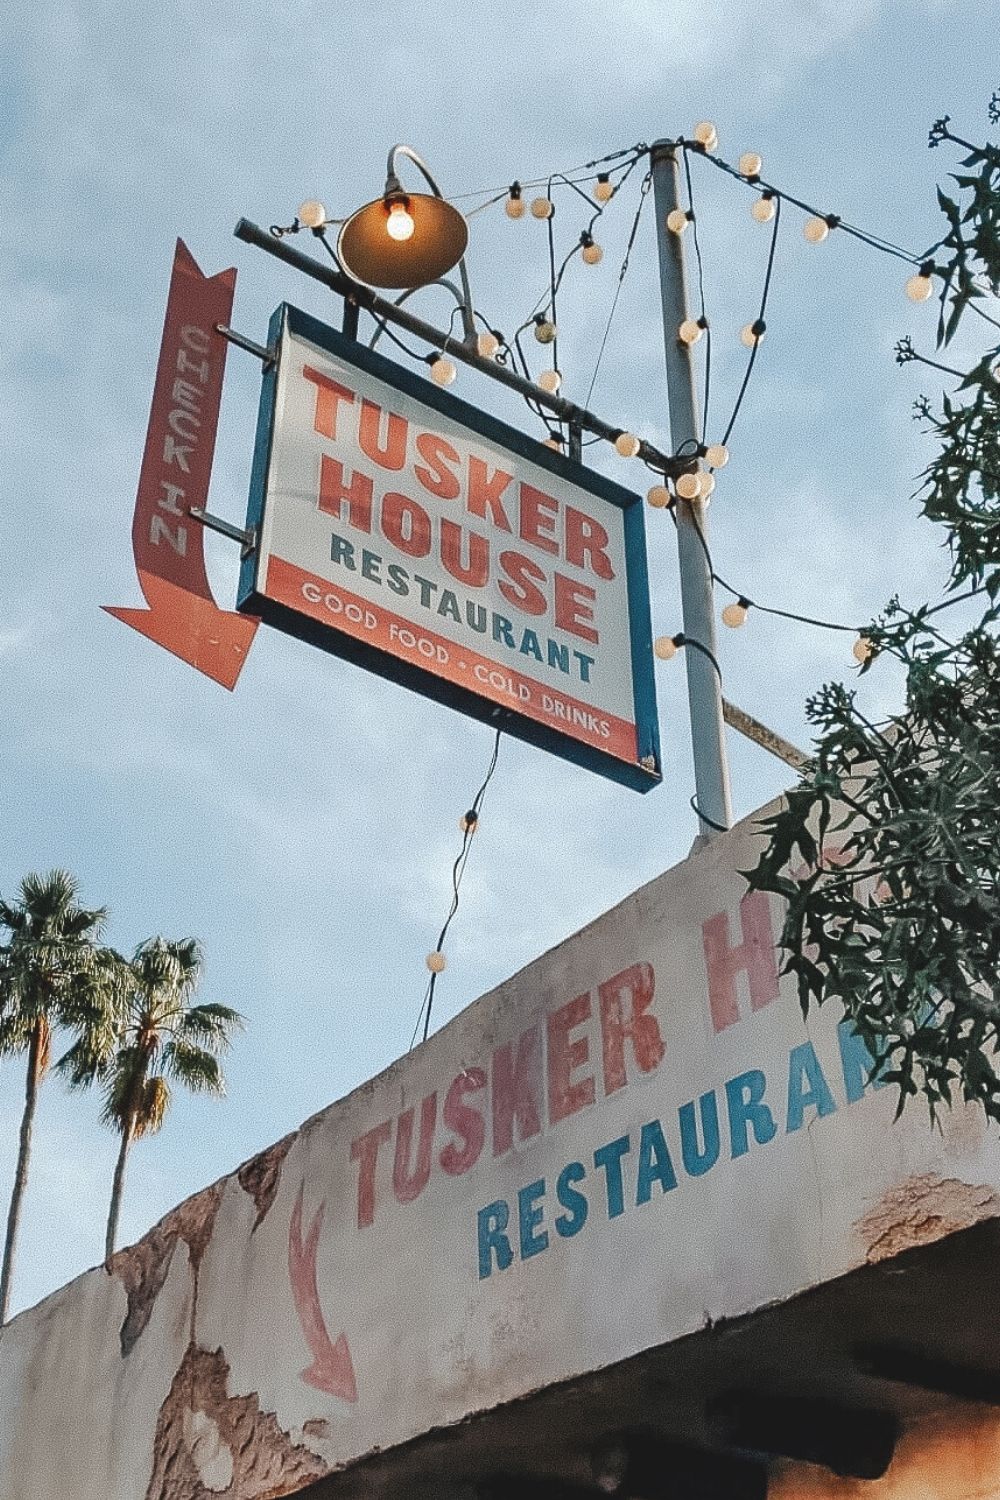 sign for tusker house restaurant at animal kingdom